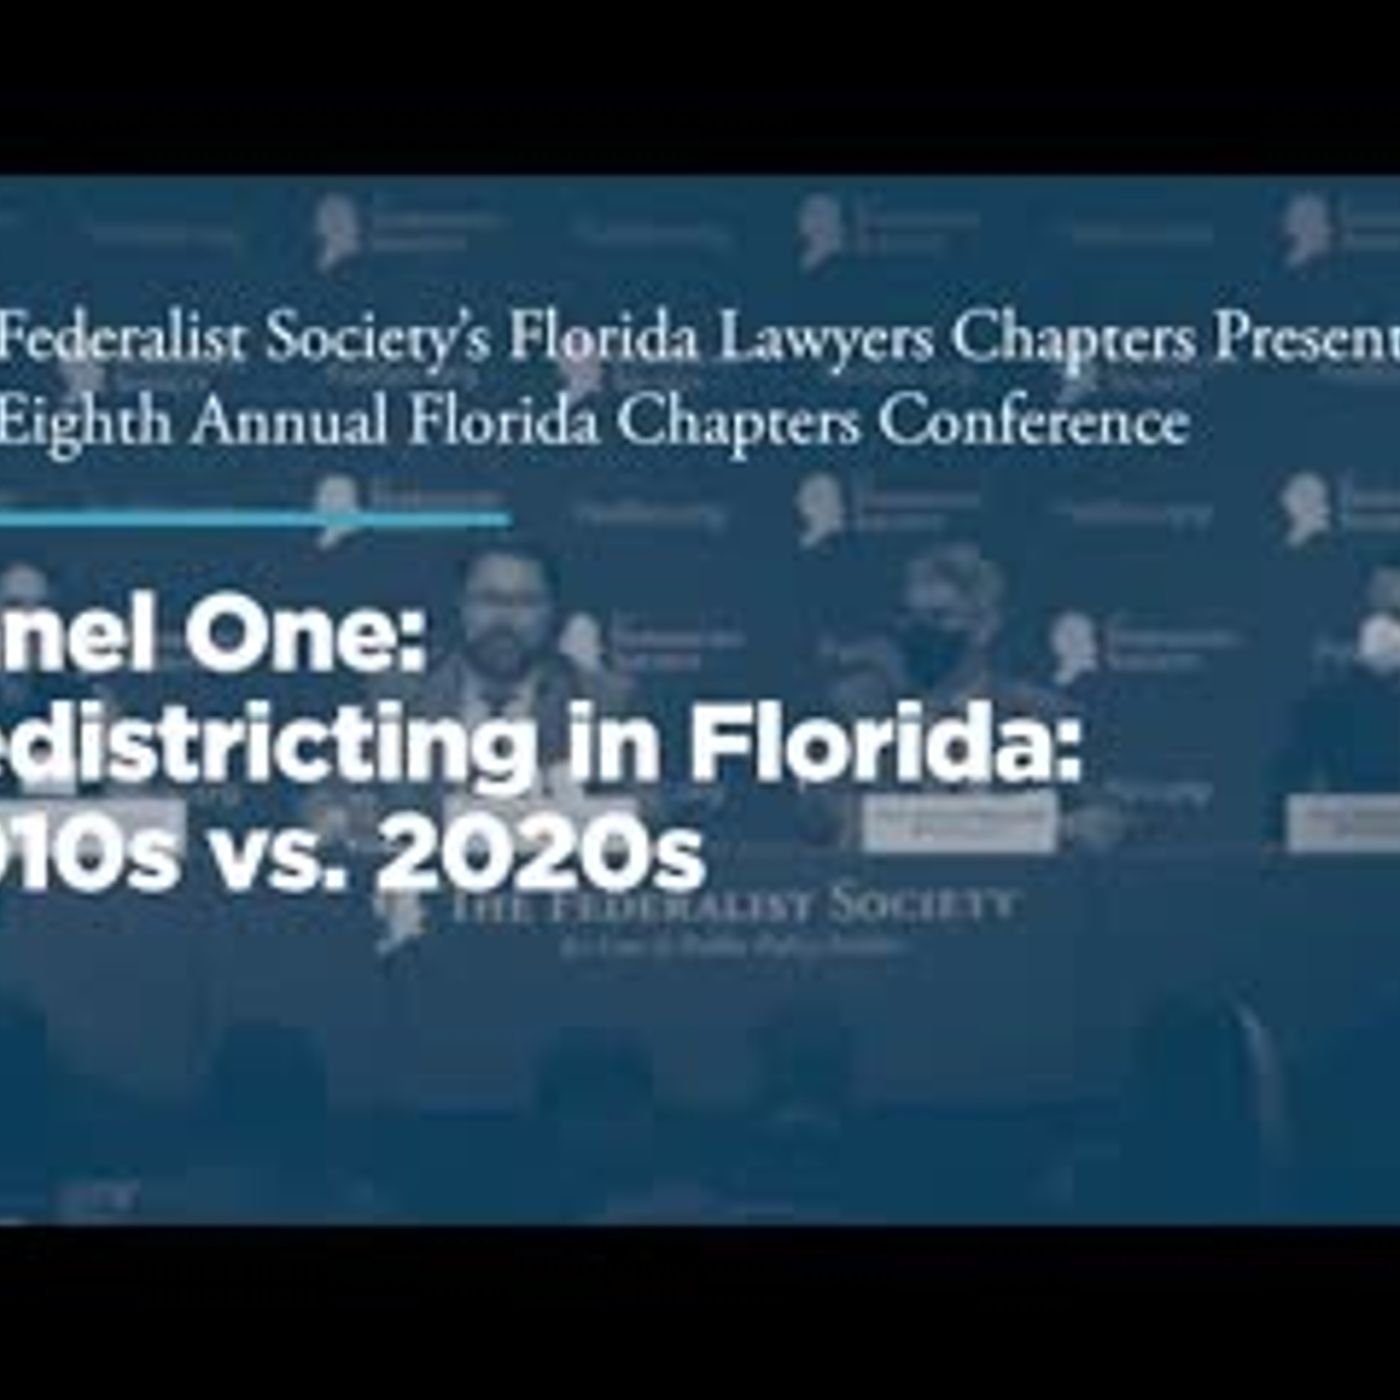 Panel One: Redistricting in Florida: 2010s vs. 2020s